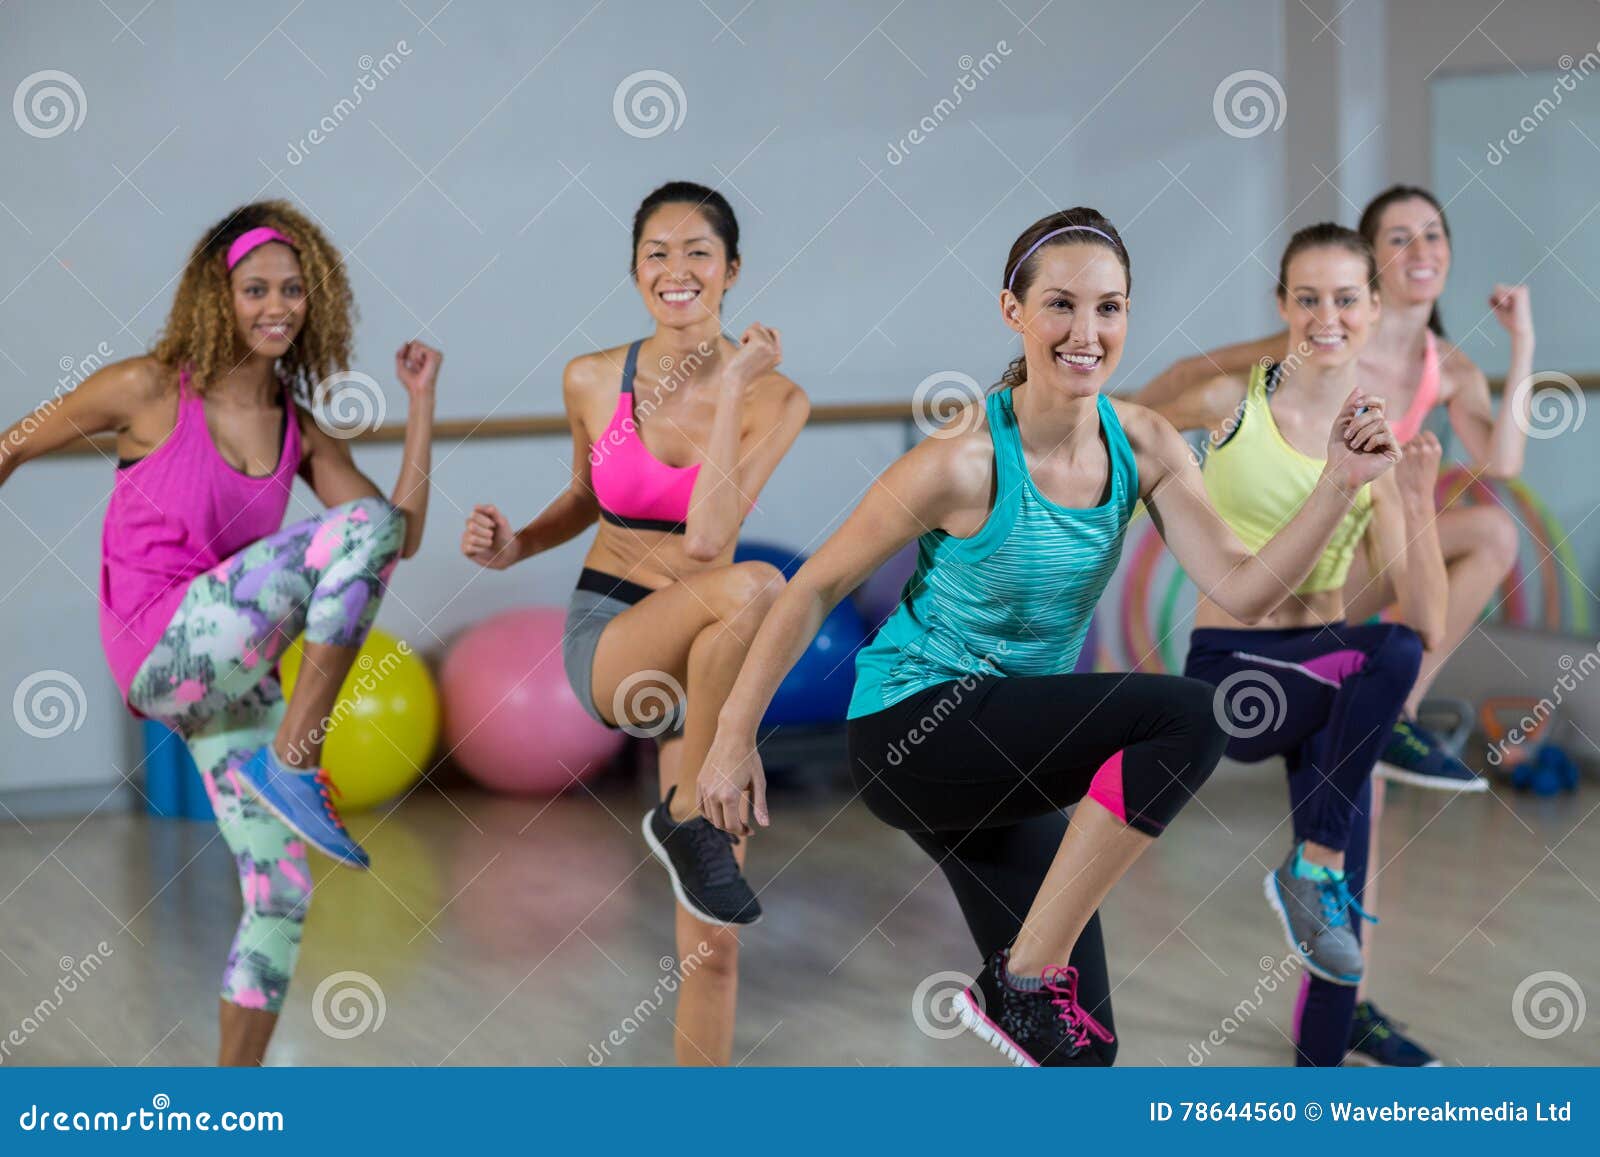 group of women performing aerobics